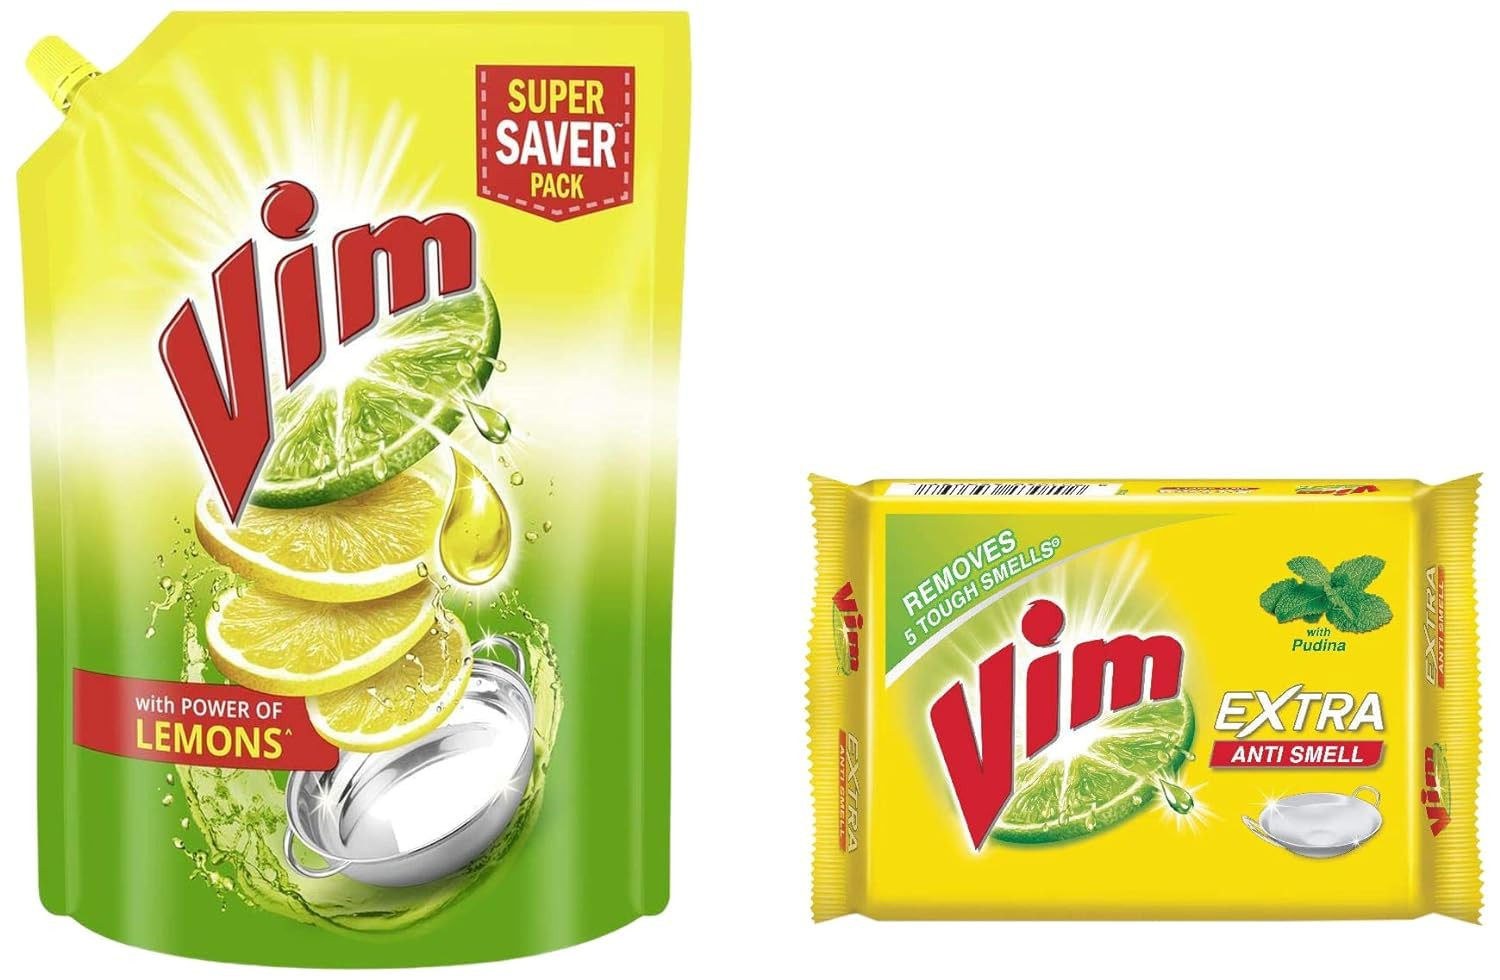 Vim Dishwash Liquid Gel Lemon, With Lemon Fragrance, 500 ml Refill Pouch & Vim Dishwash Anti Smell Bar, Pudina, Removes Tough Food Smells From Utensils 250 g COMBO